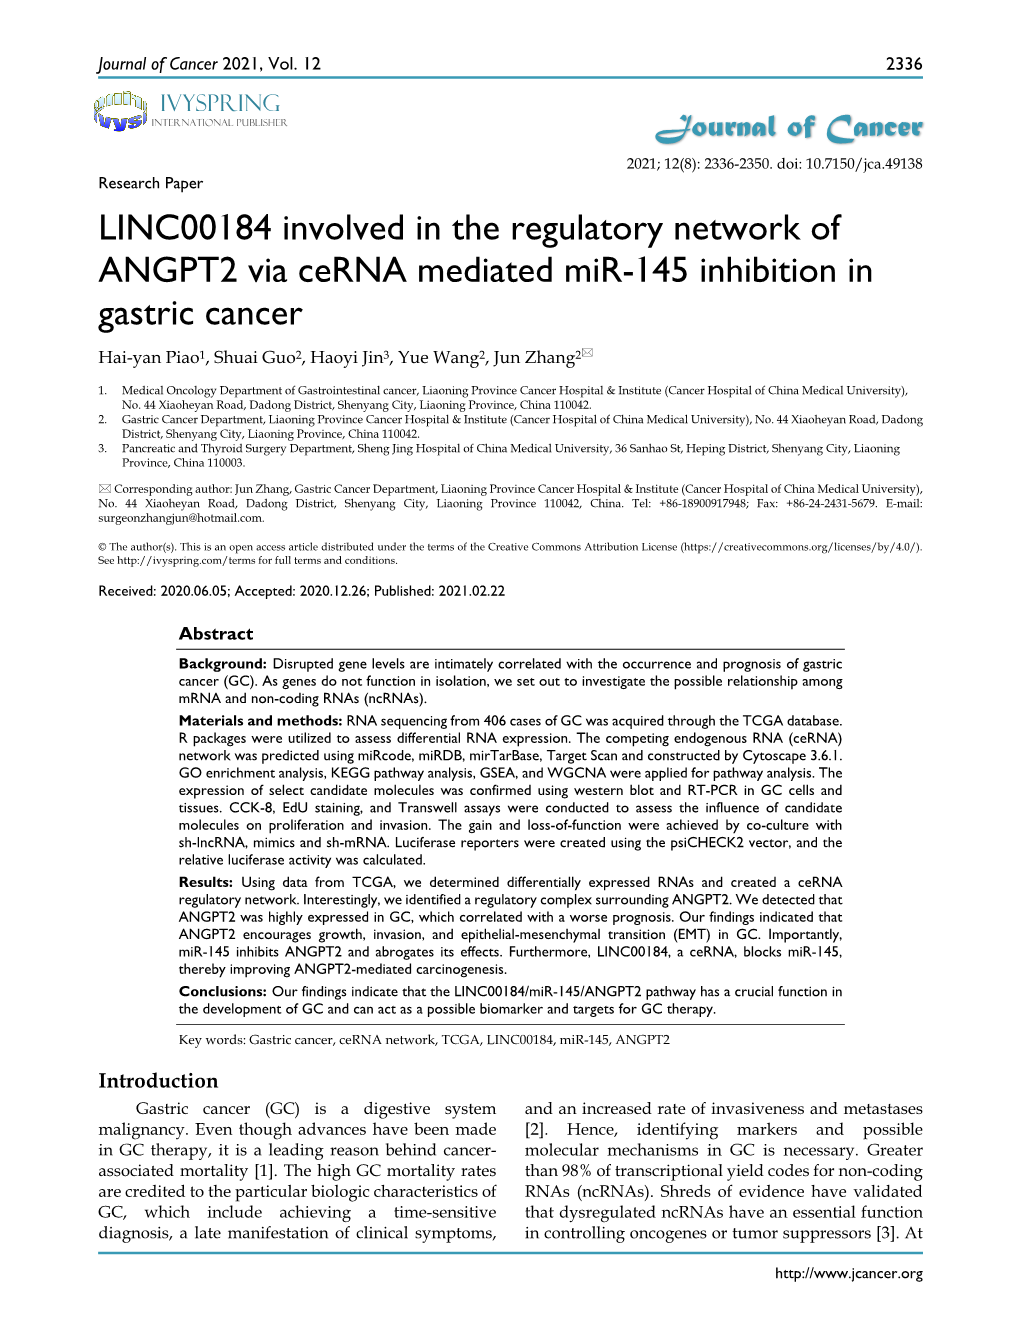 LINC00184 Involved in the Regulatory Network of ANGPT2 Via Cerna